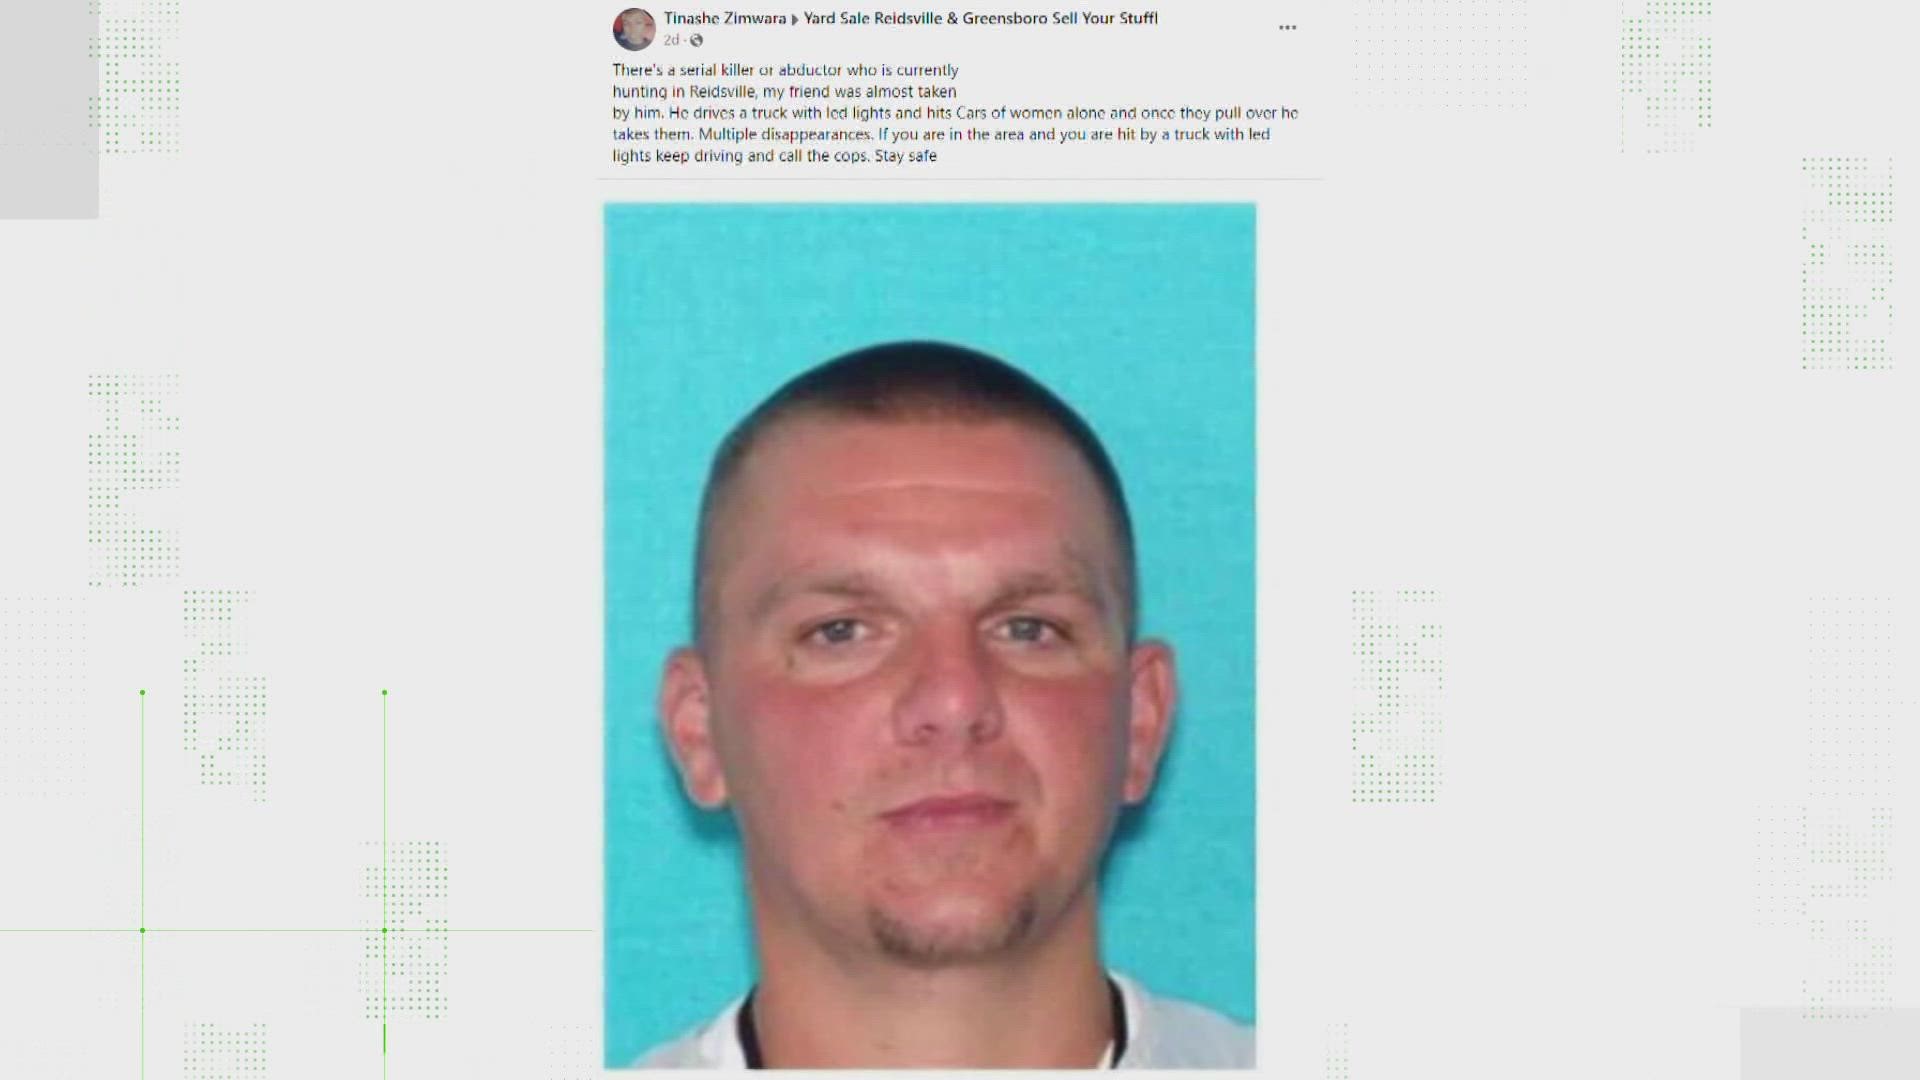 The Rockingham County Sheriff investigates serial killer posts circulating online.